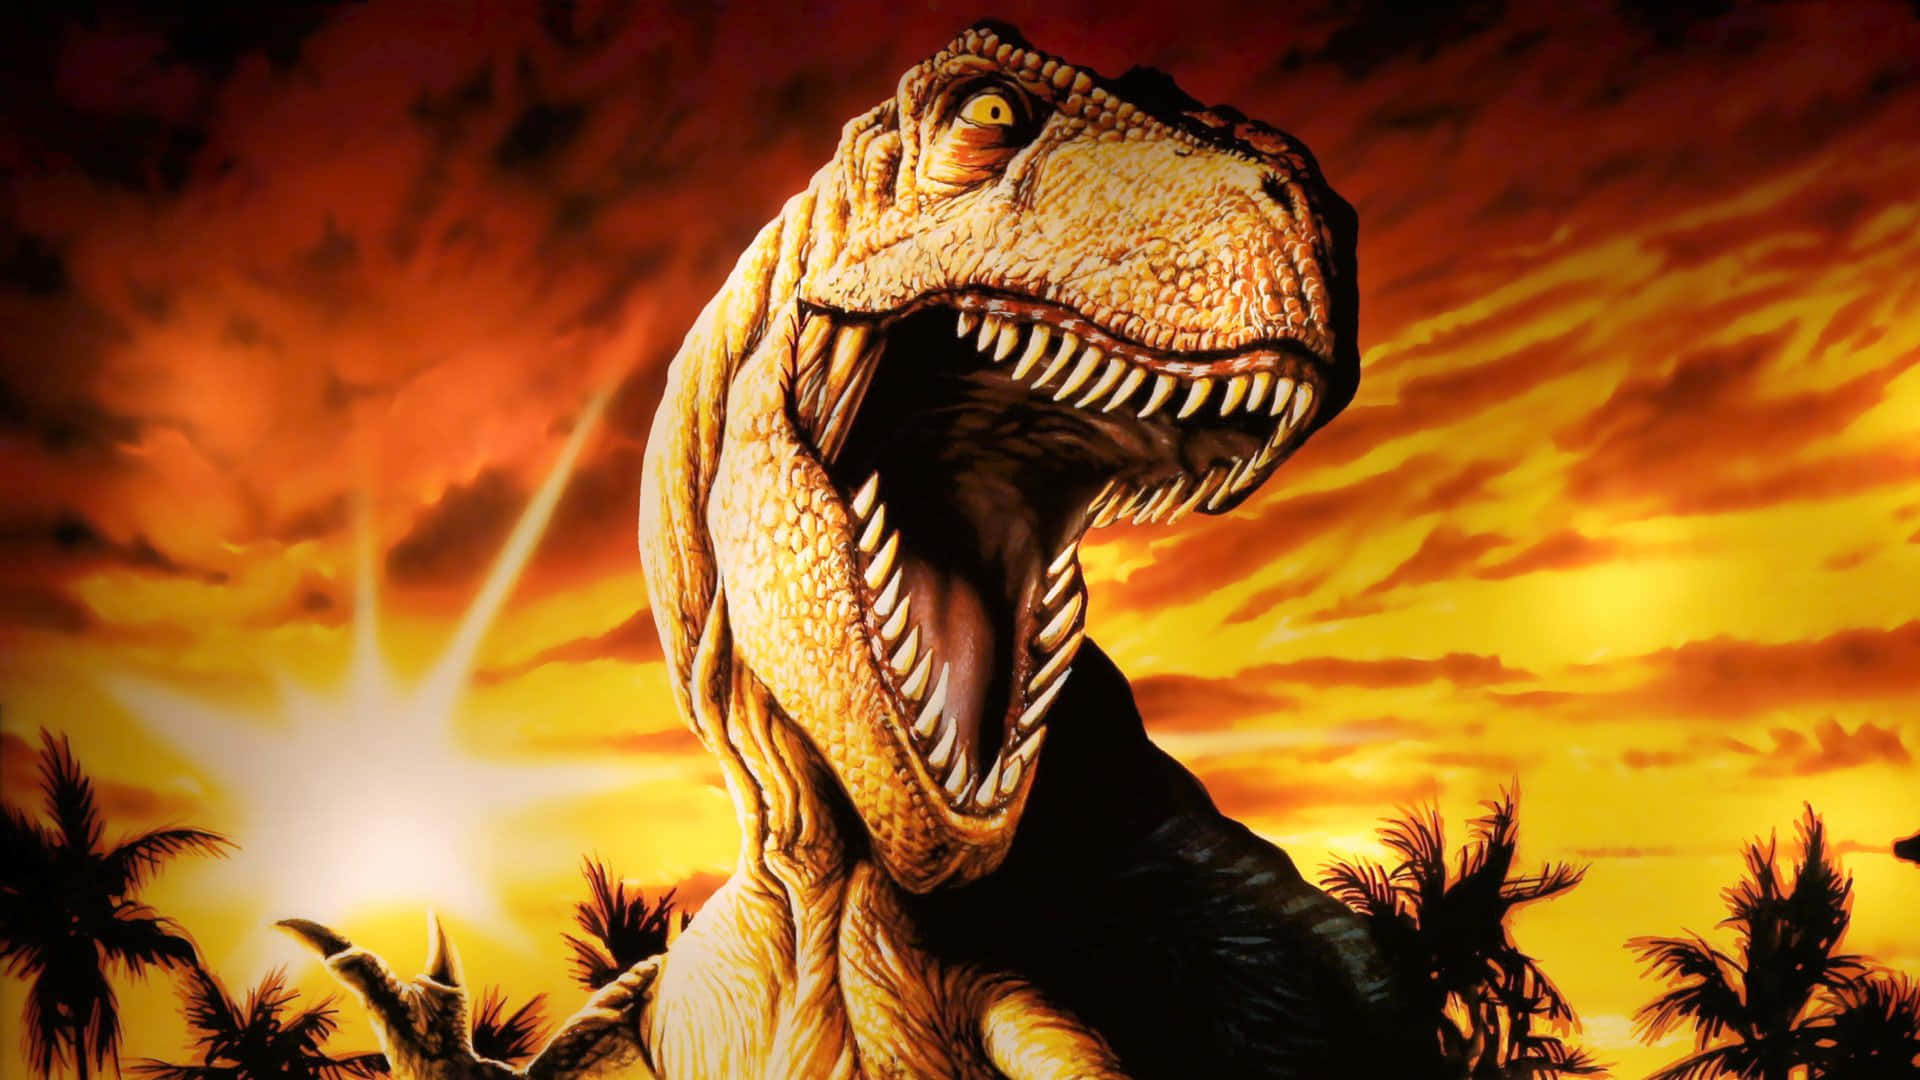 Jurassic Park Background Wallpaper